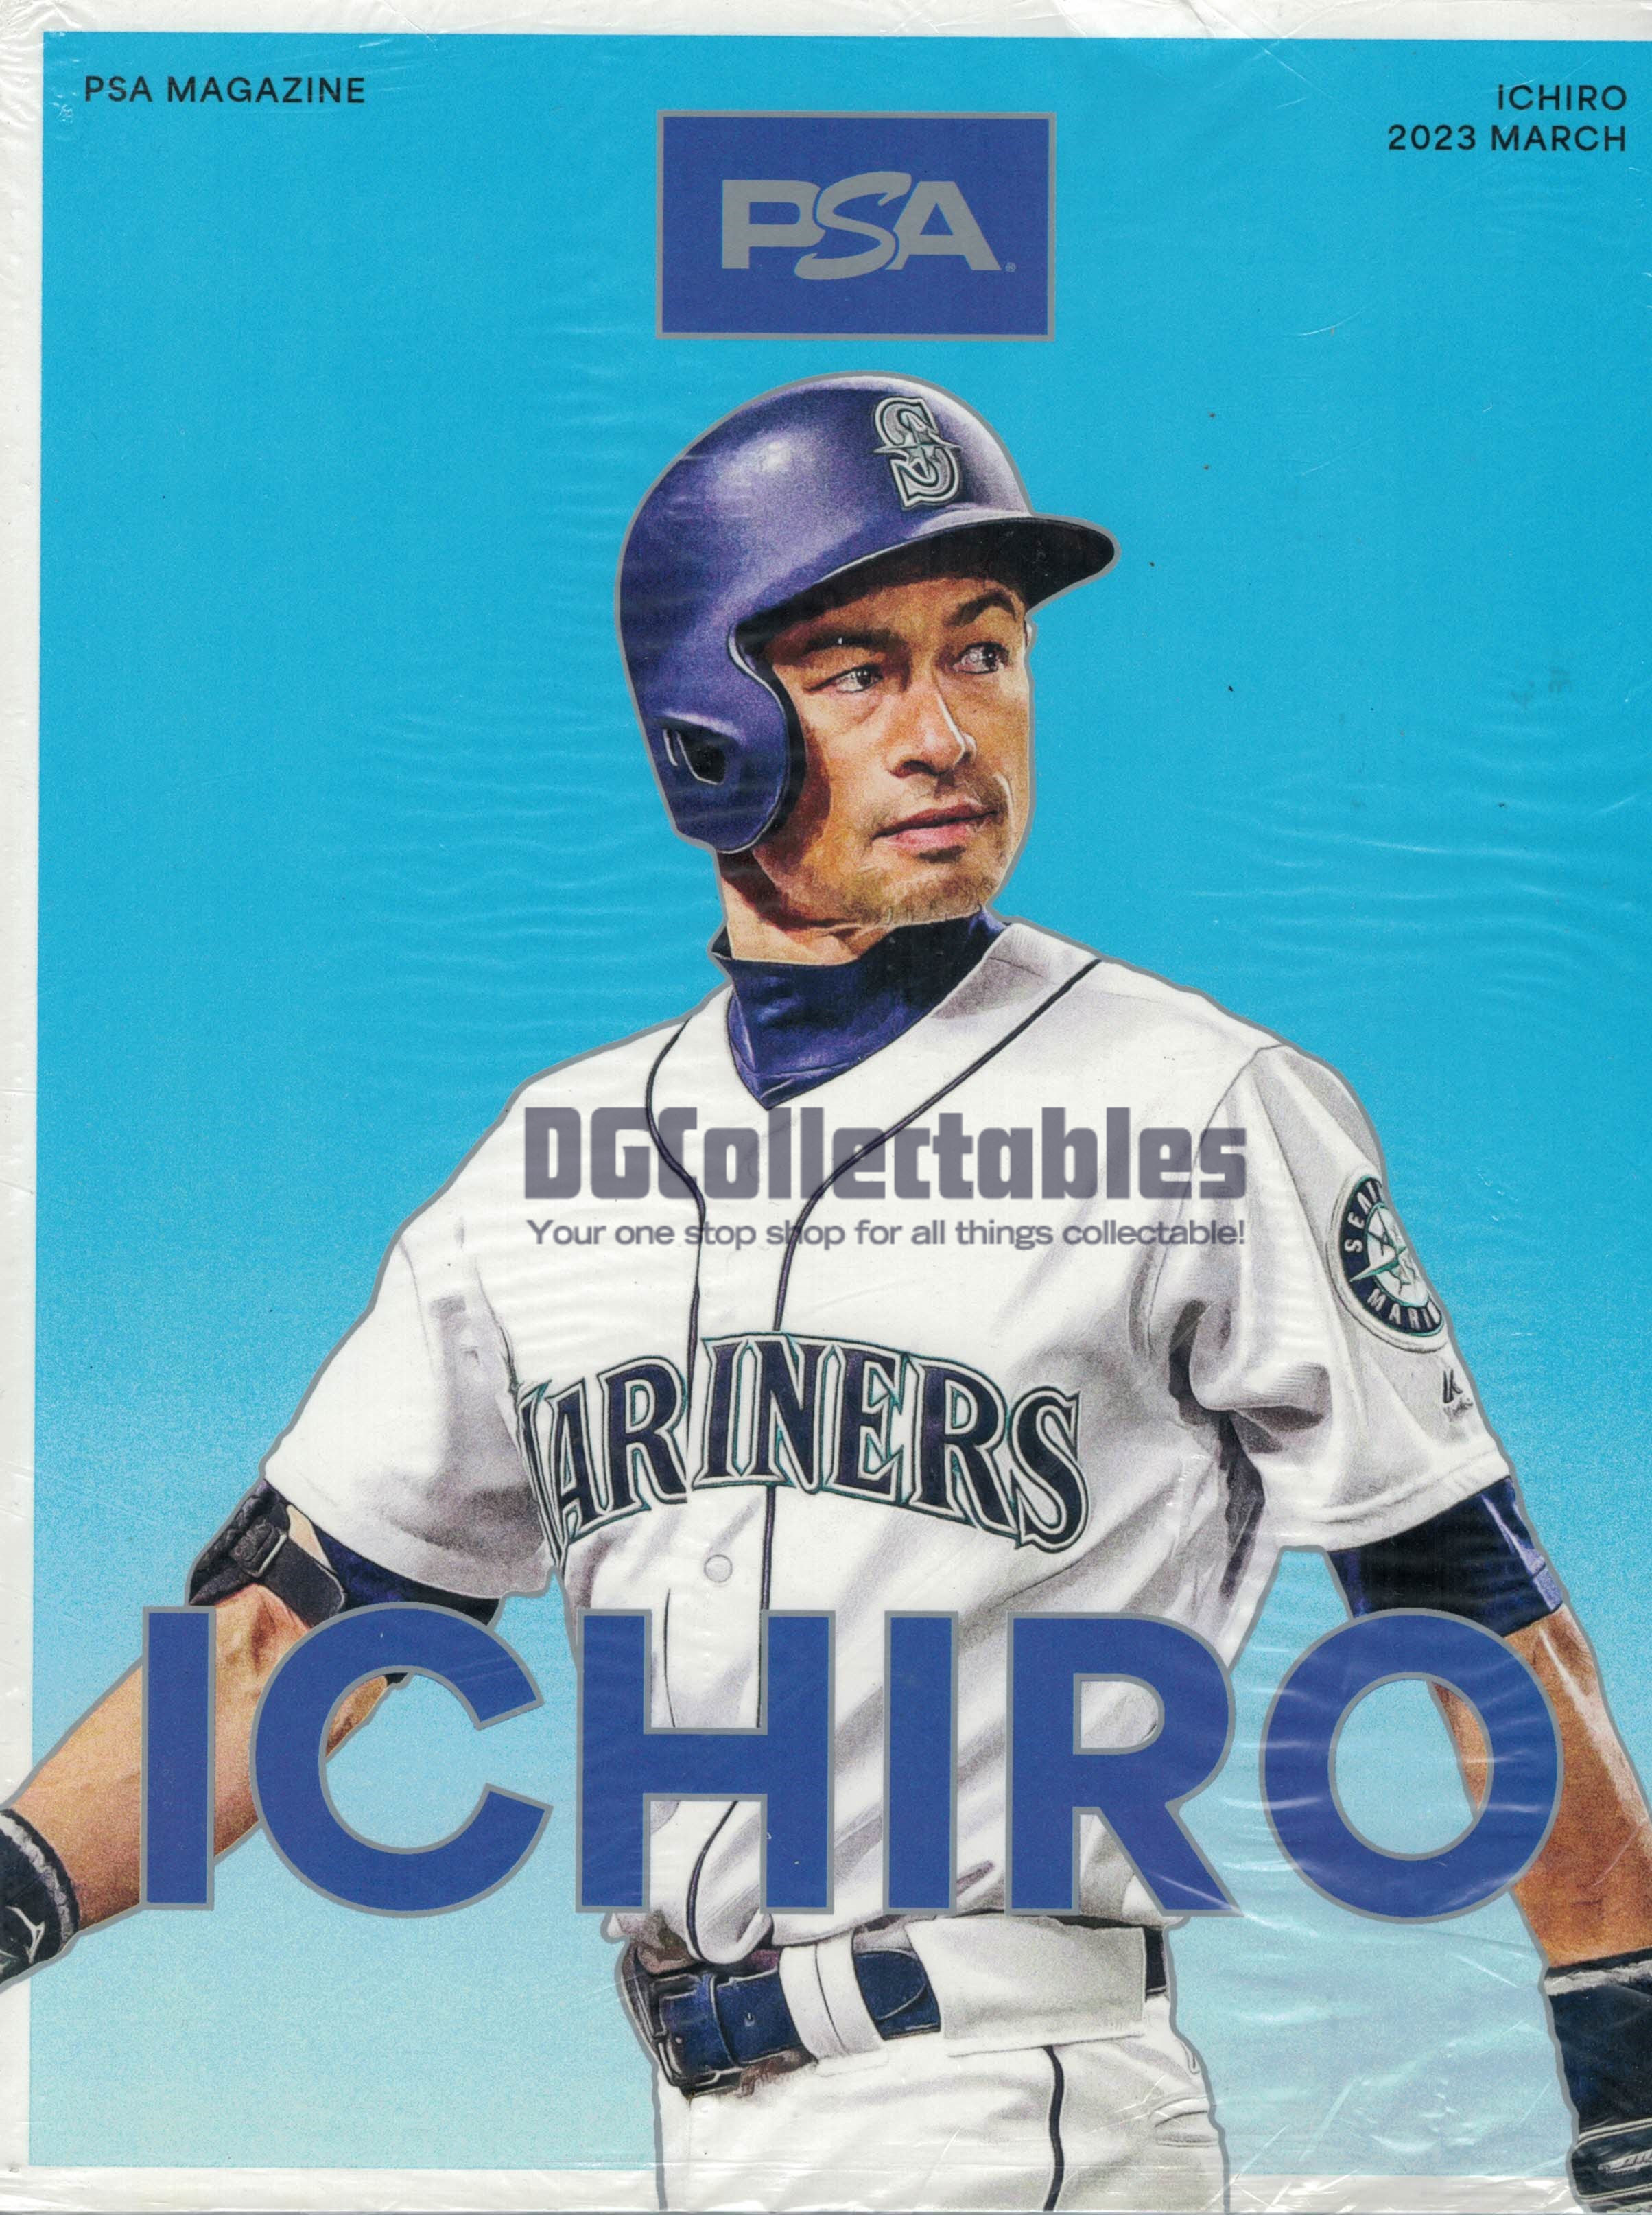 PSA Magazine March 2023 Ichiro Suzuki Cover DGCollectables